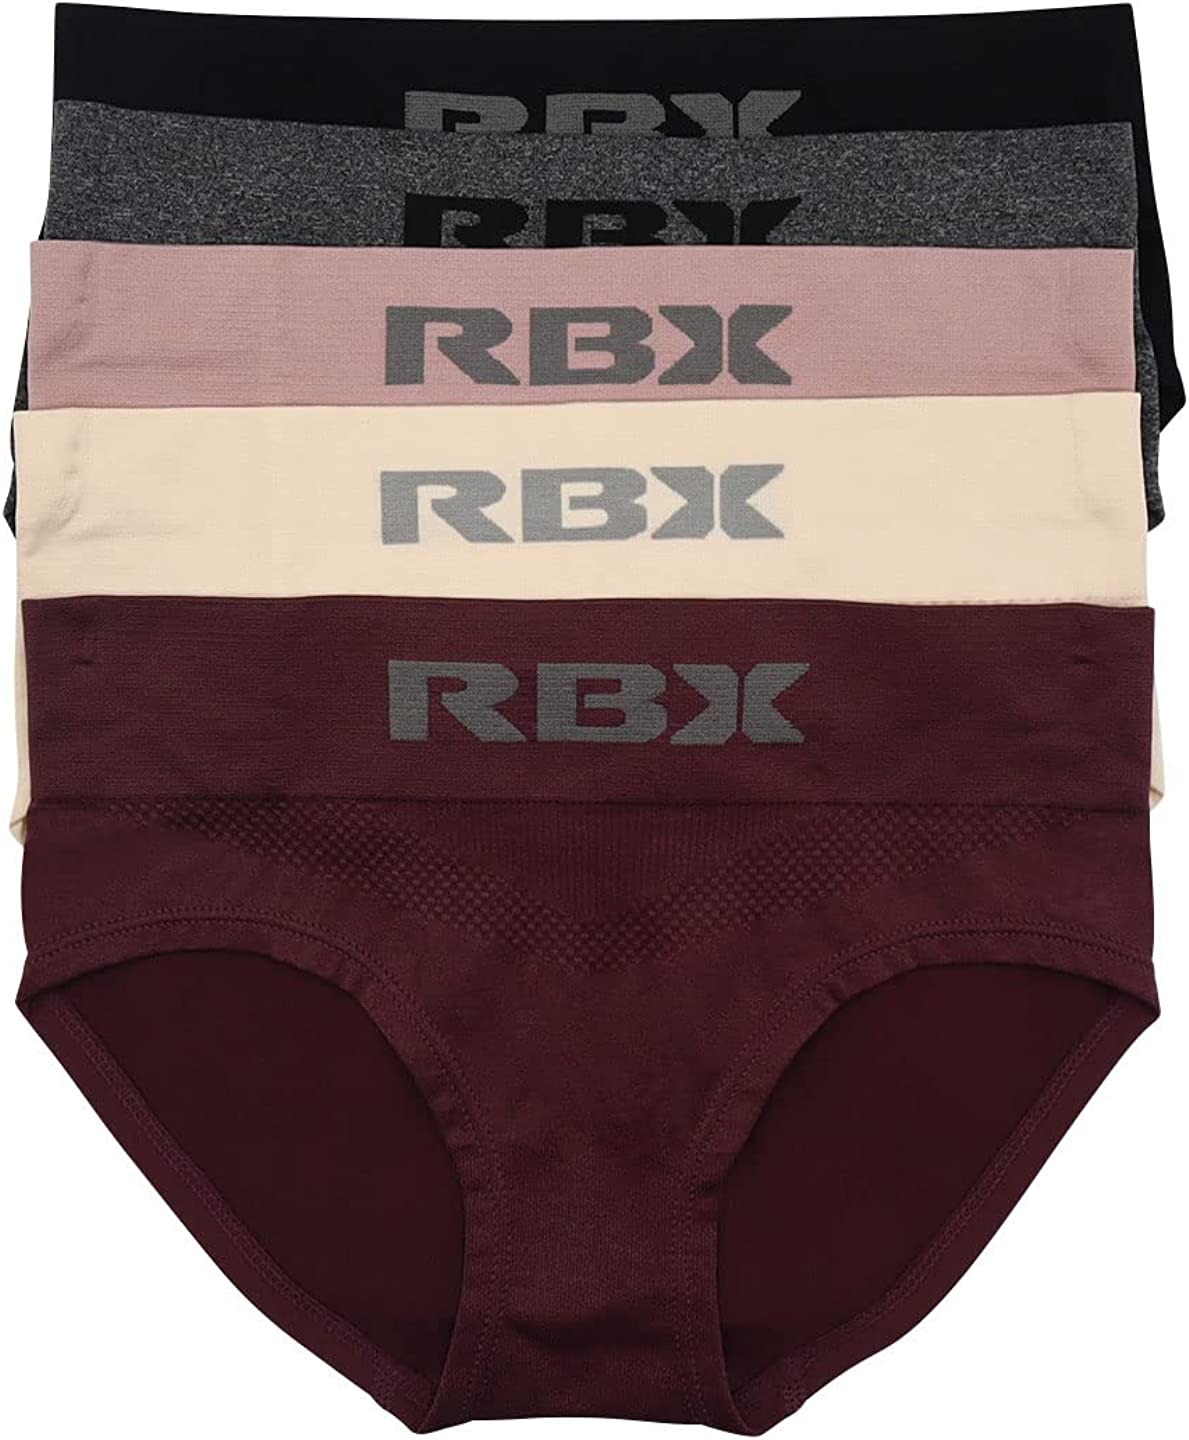 RBX Active Women's Underwear 5-Pack Seamless Hipster Panties Bikini Briefs